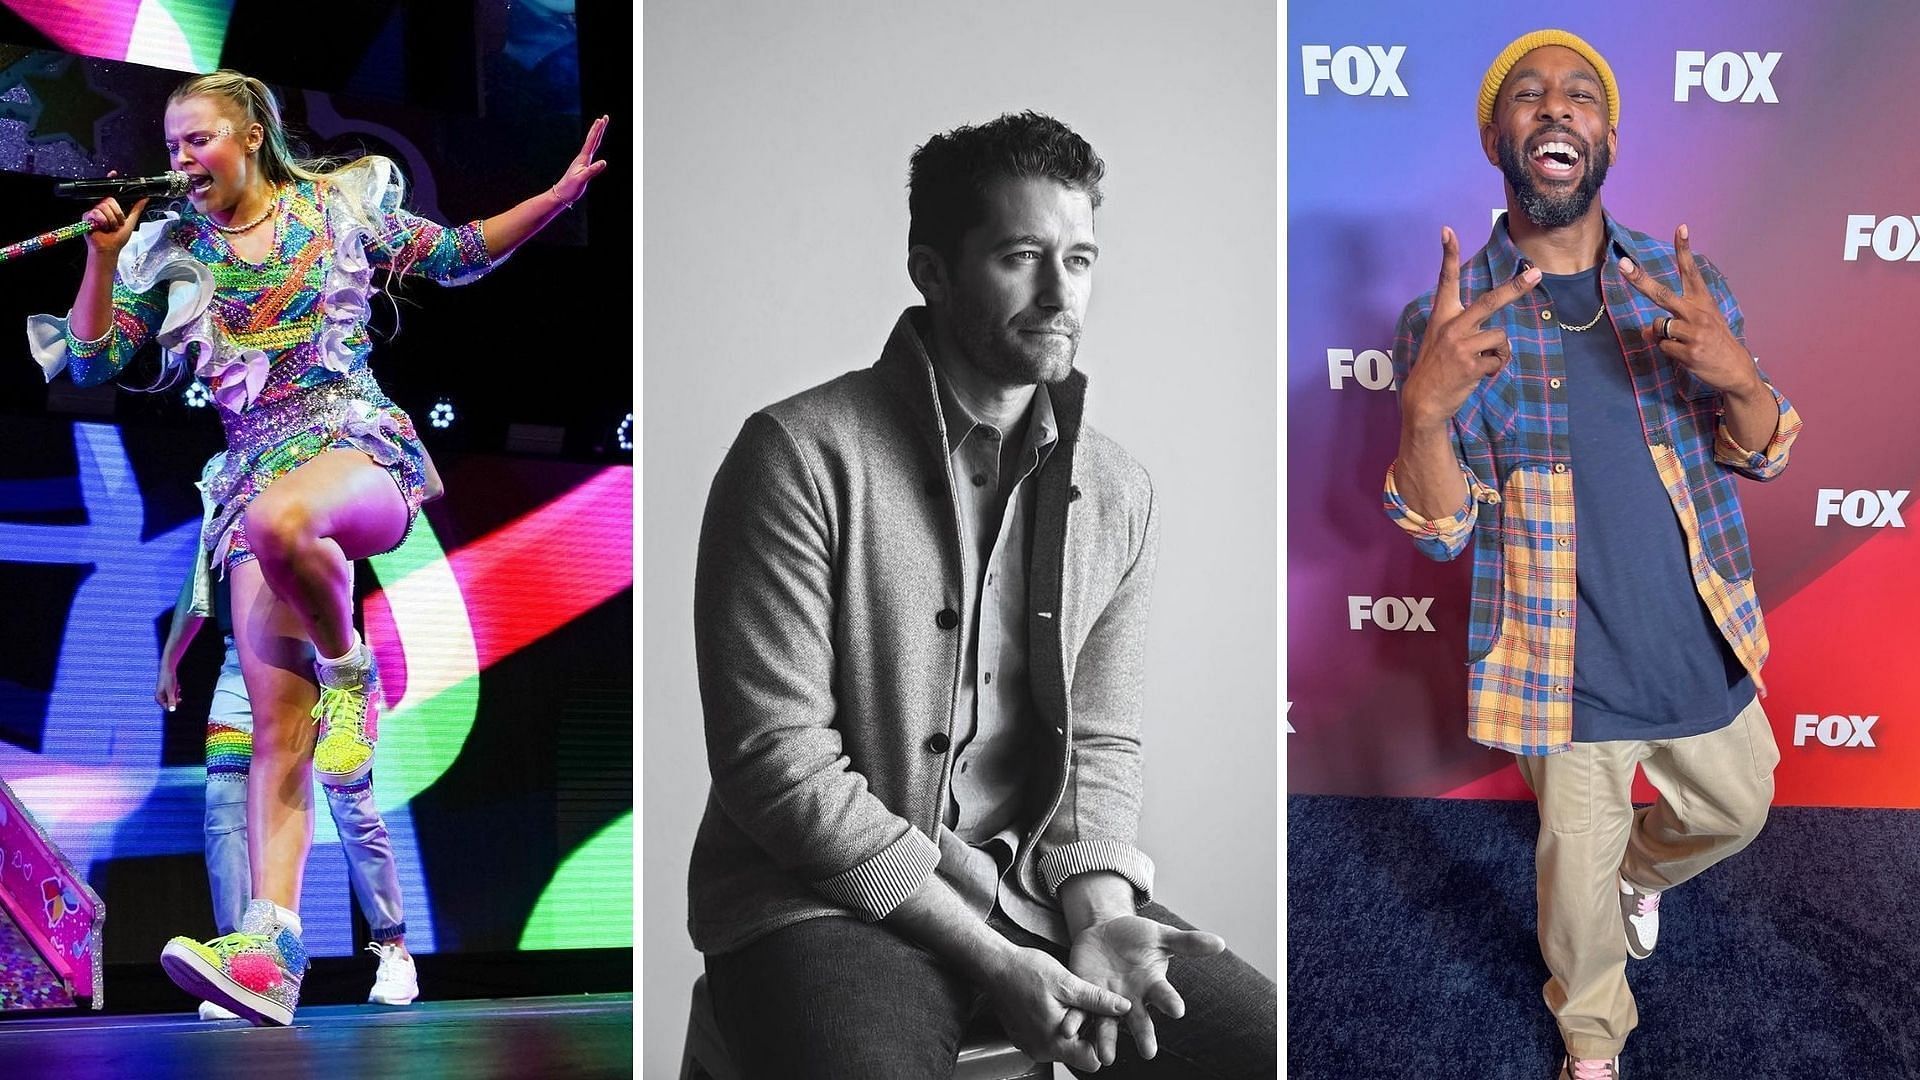 Three new judges will make their debut on the Season 17 premiere of So You Think You Can Dance (Image via Instagram/itsjojosiwa,matthewmorrison,sir_twitch_alot)